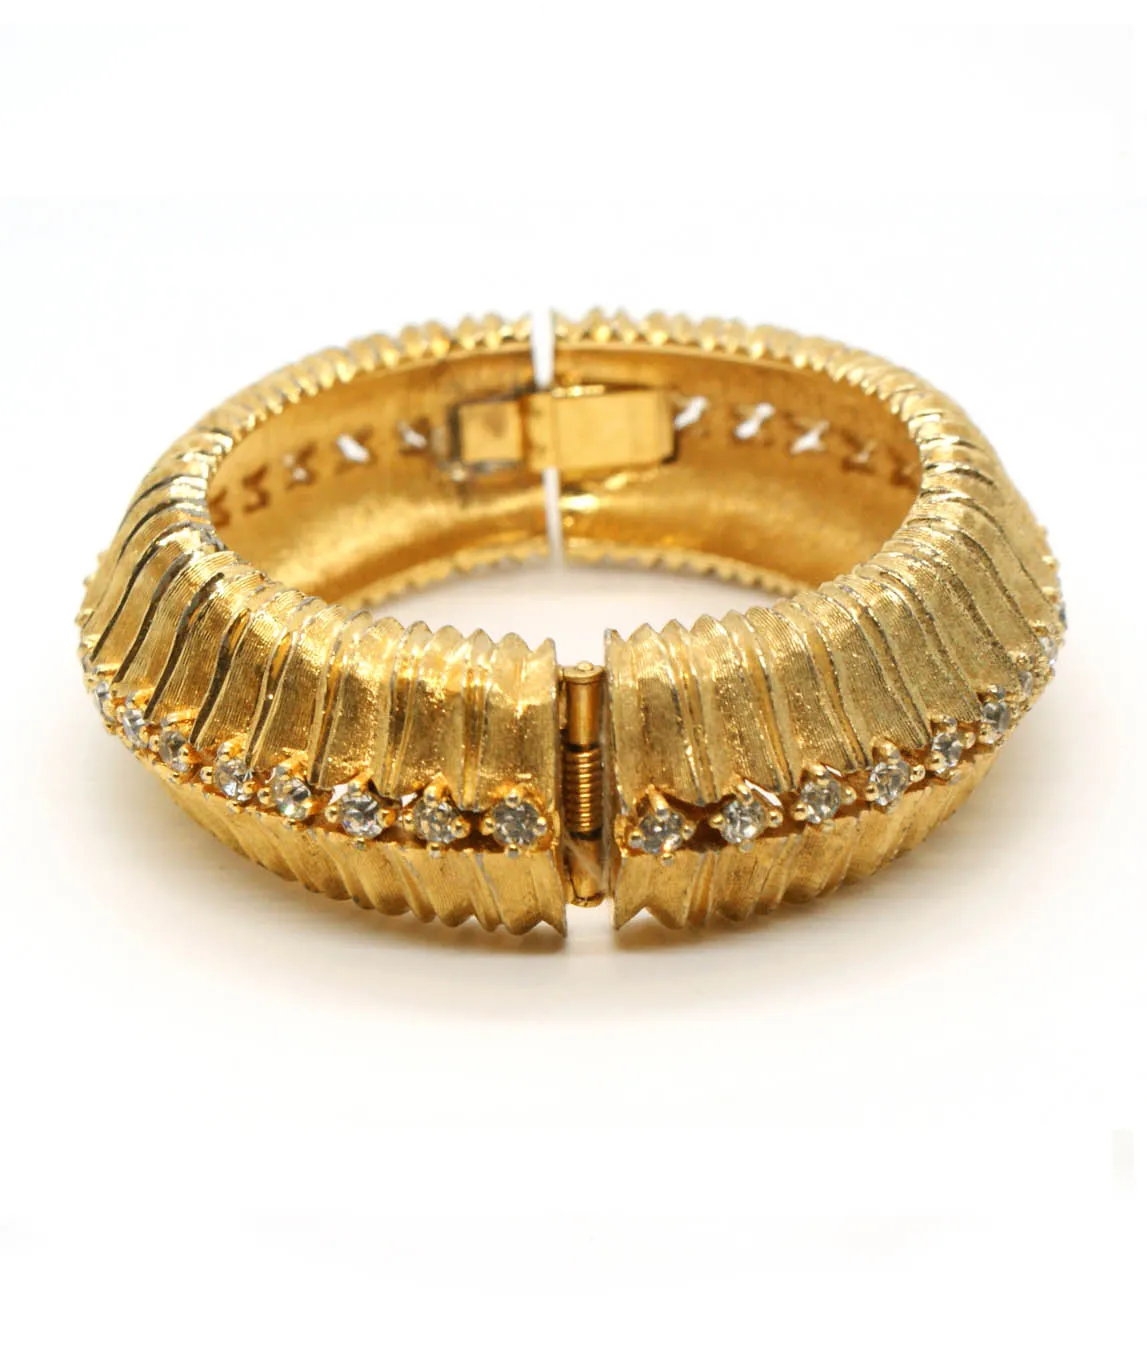 Joseph Mazer Gold and Rhinestone Bangle Bracelet